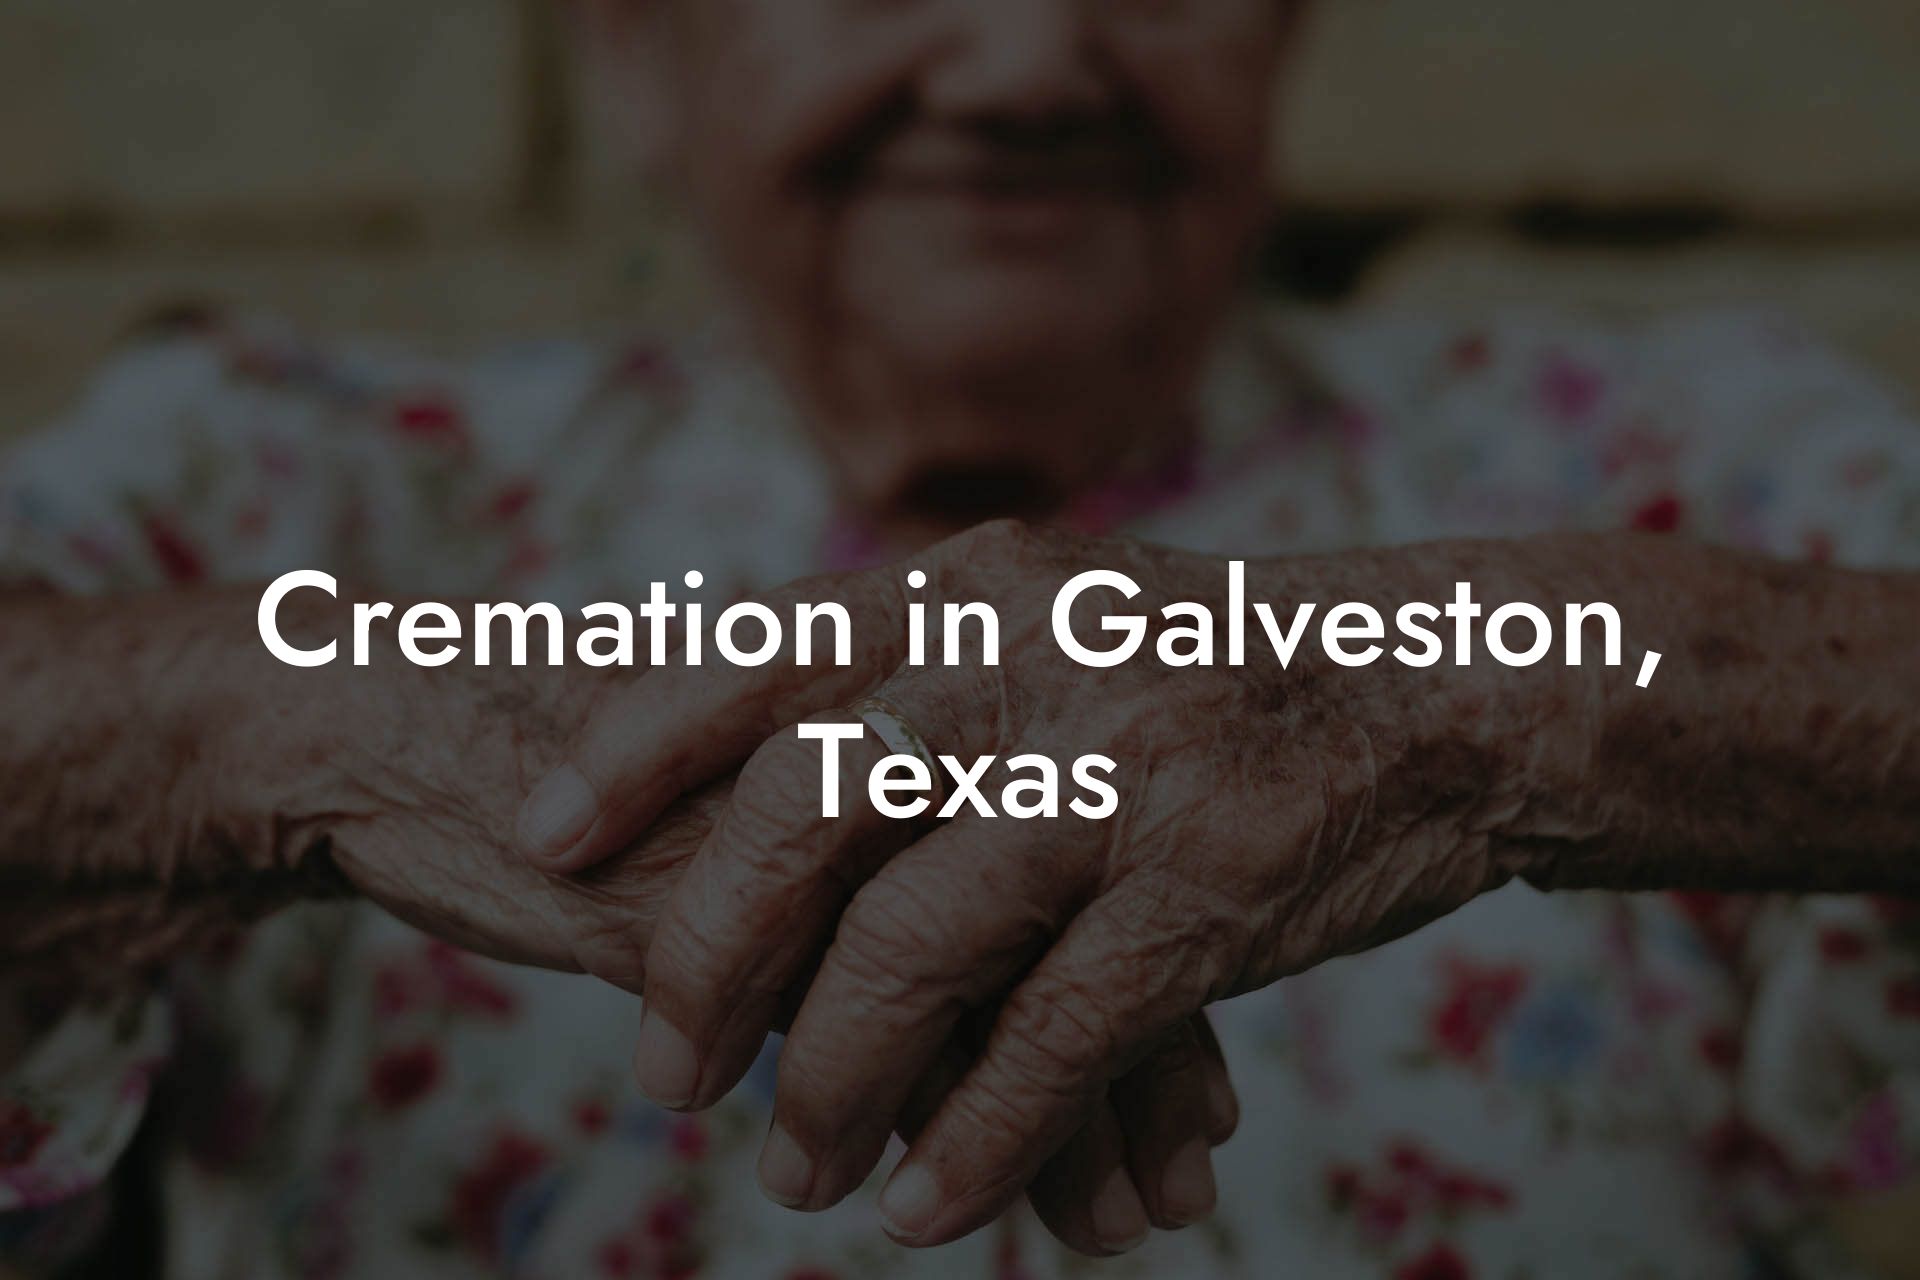 Cremation in Galveston, Texas